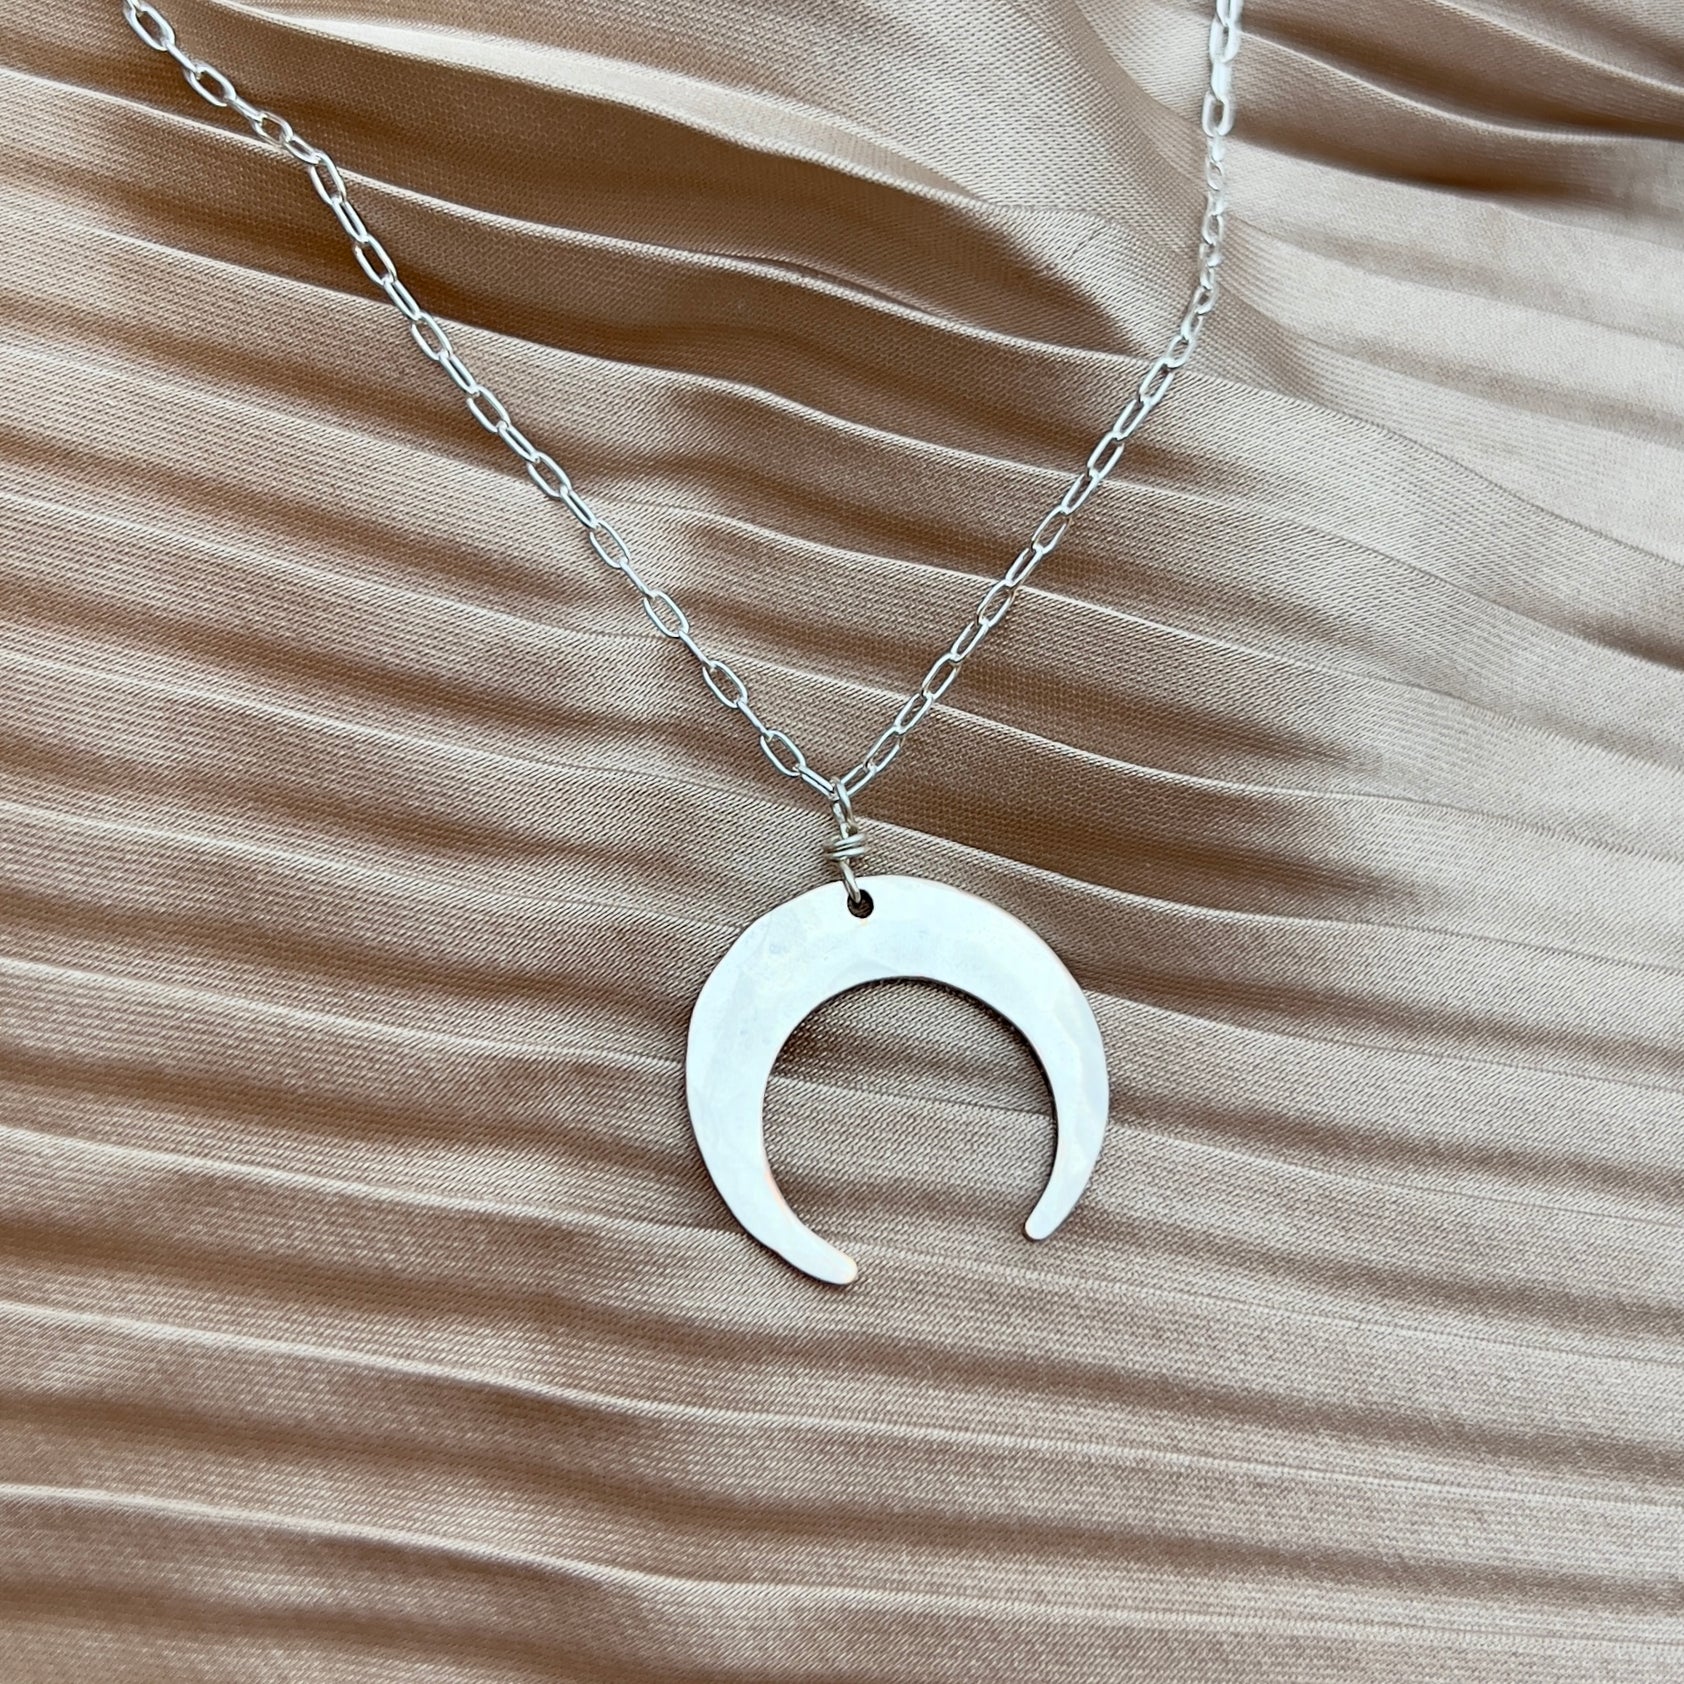 Buy El Regalo Evil Eye Crescent Moon Pendant Necklace | Turkish Evil Eye  Blue Moon Pendant Necklace for Girls & Women at Amazon.in